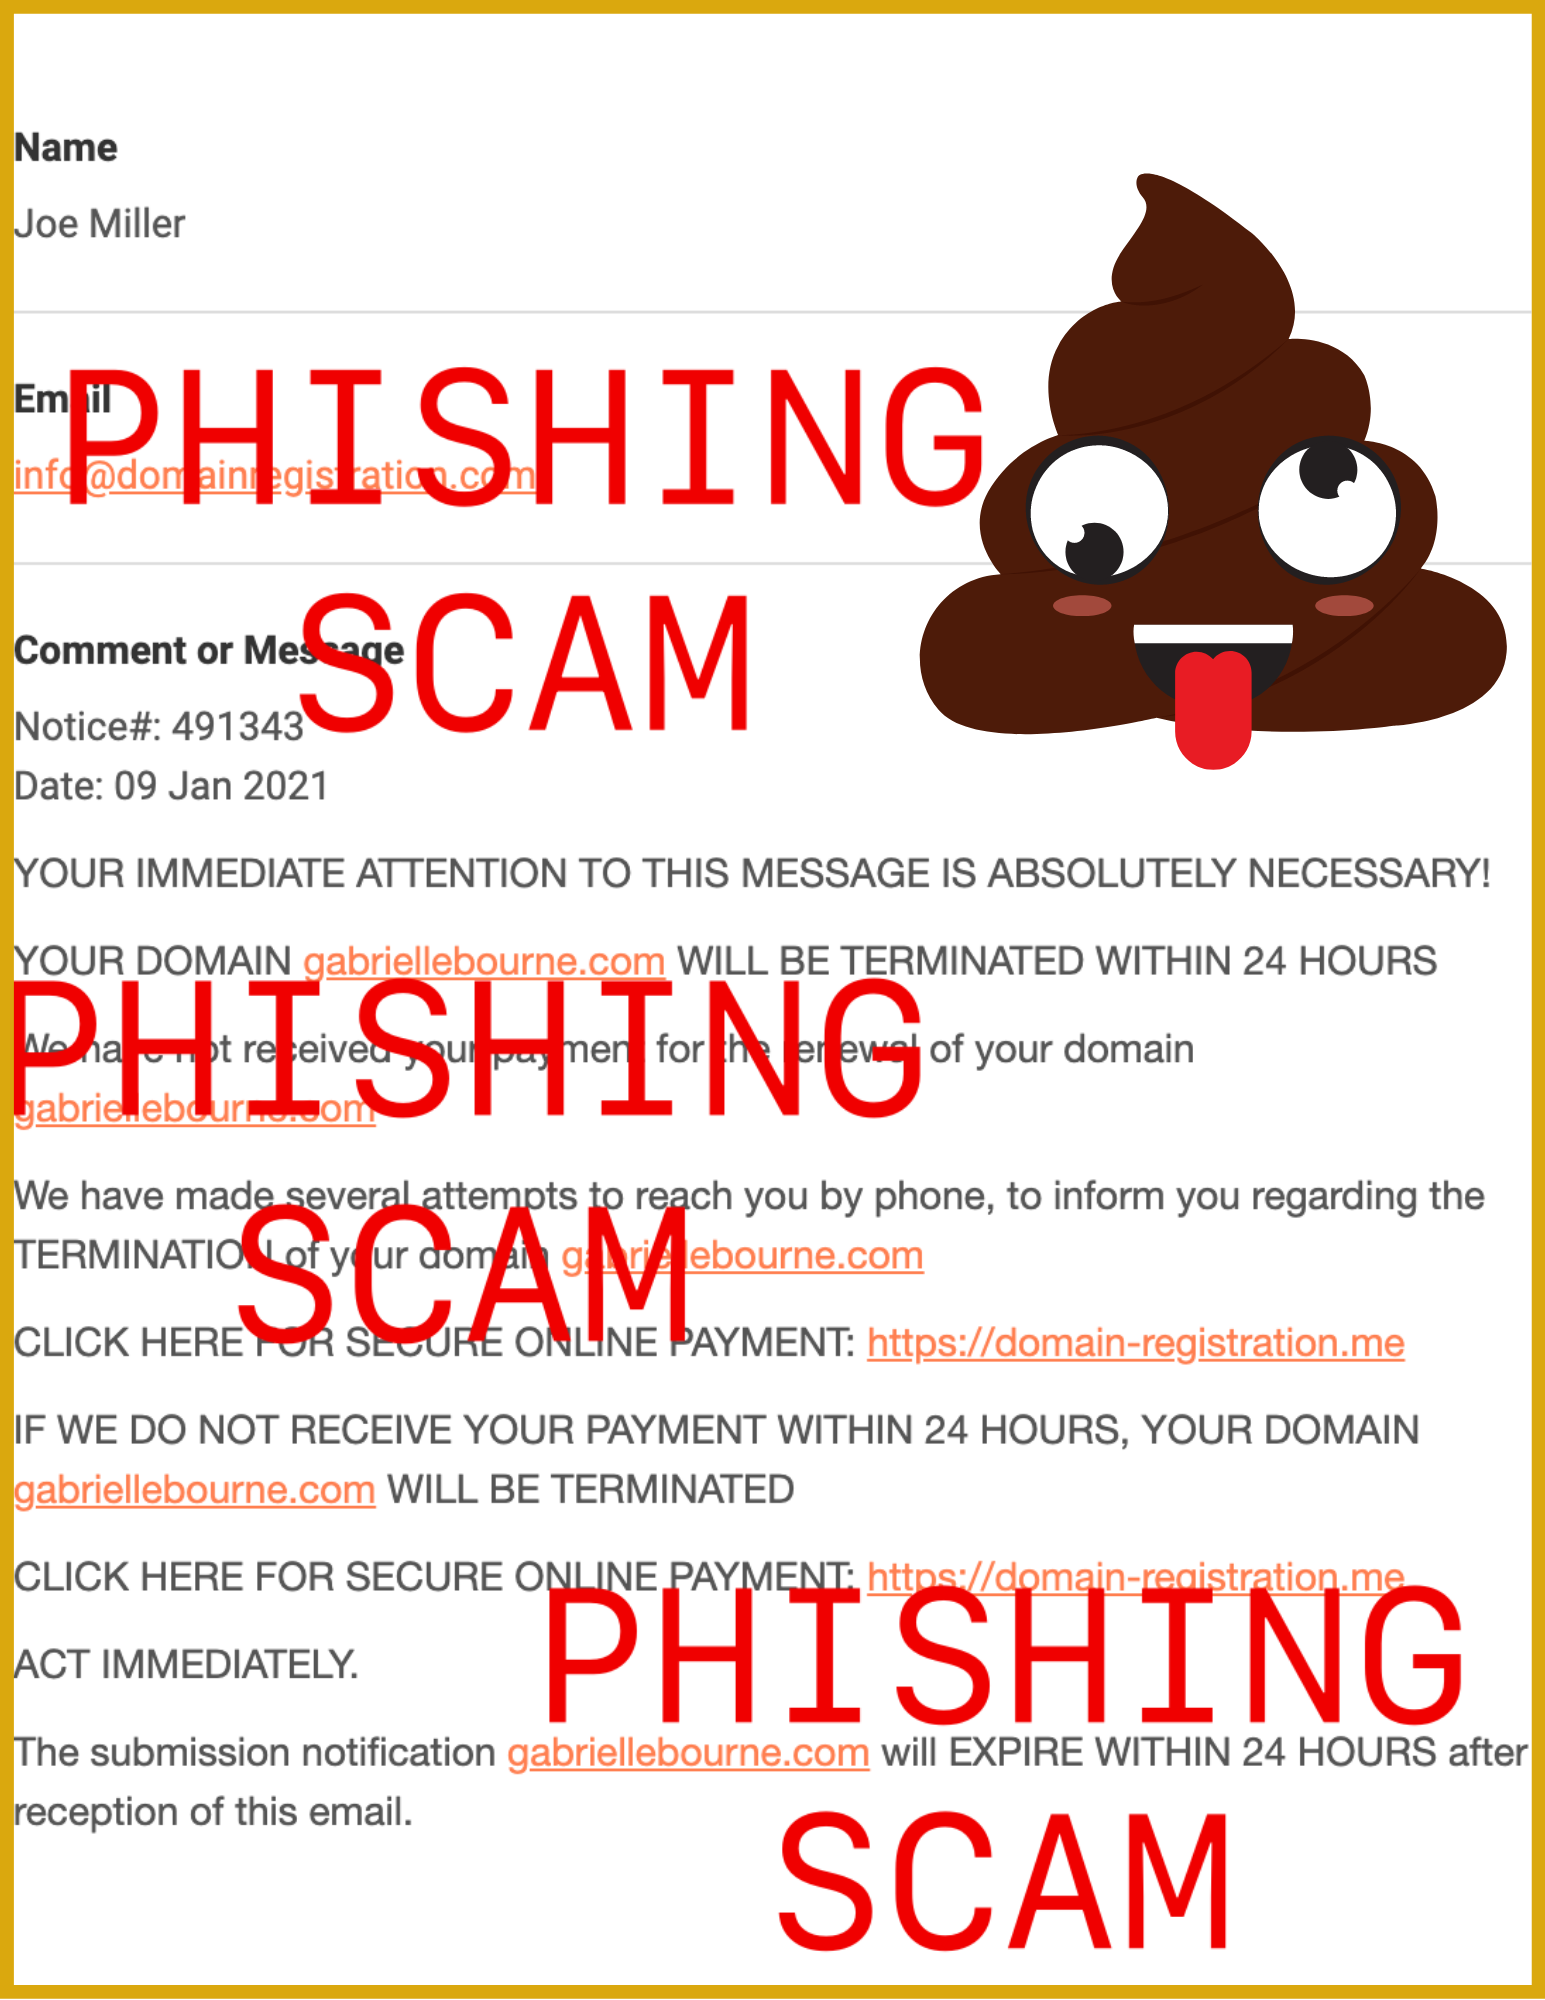 Phishing Scam Joe Miller